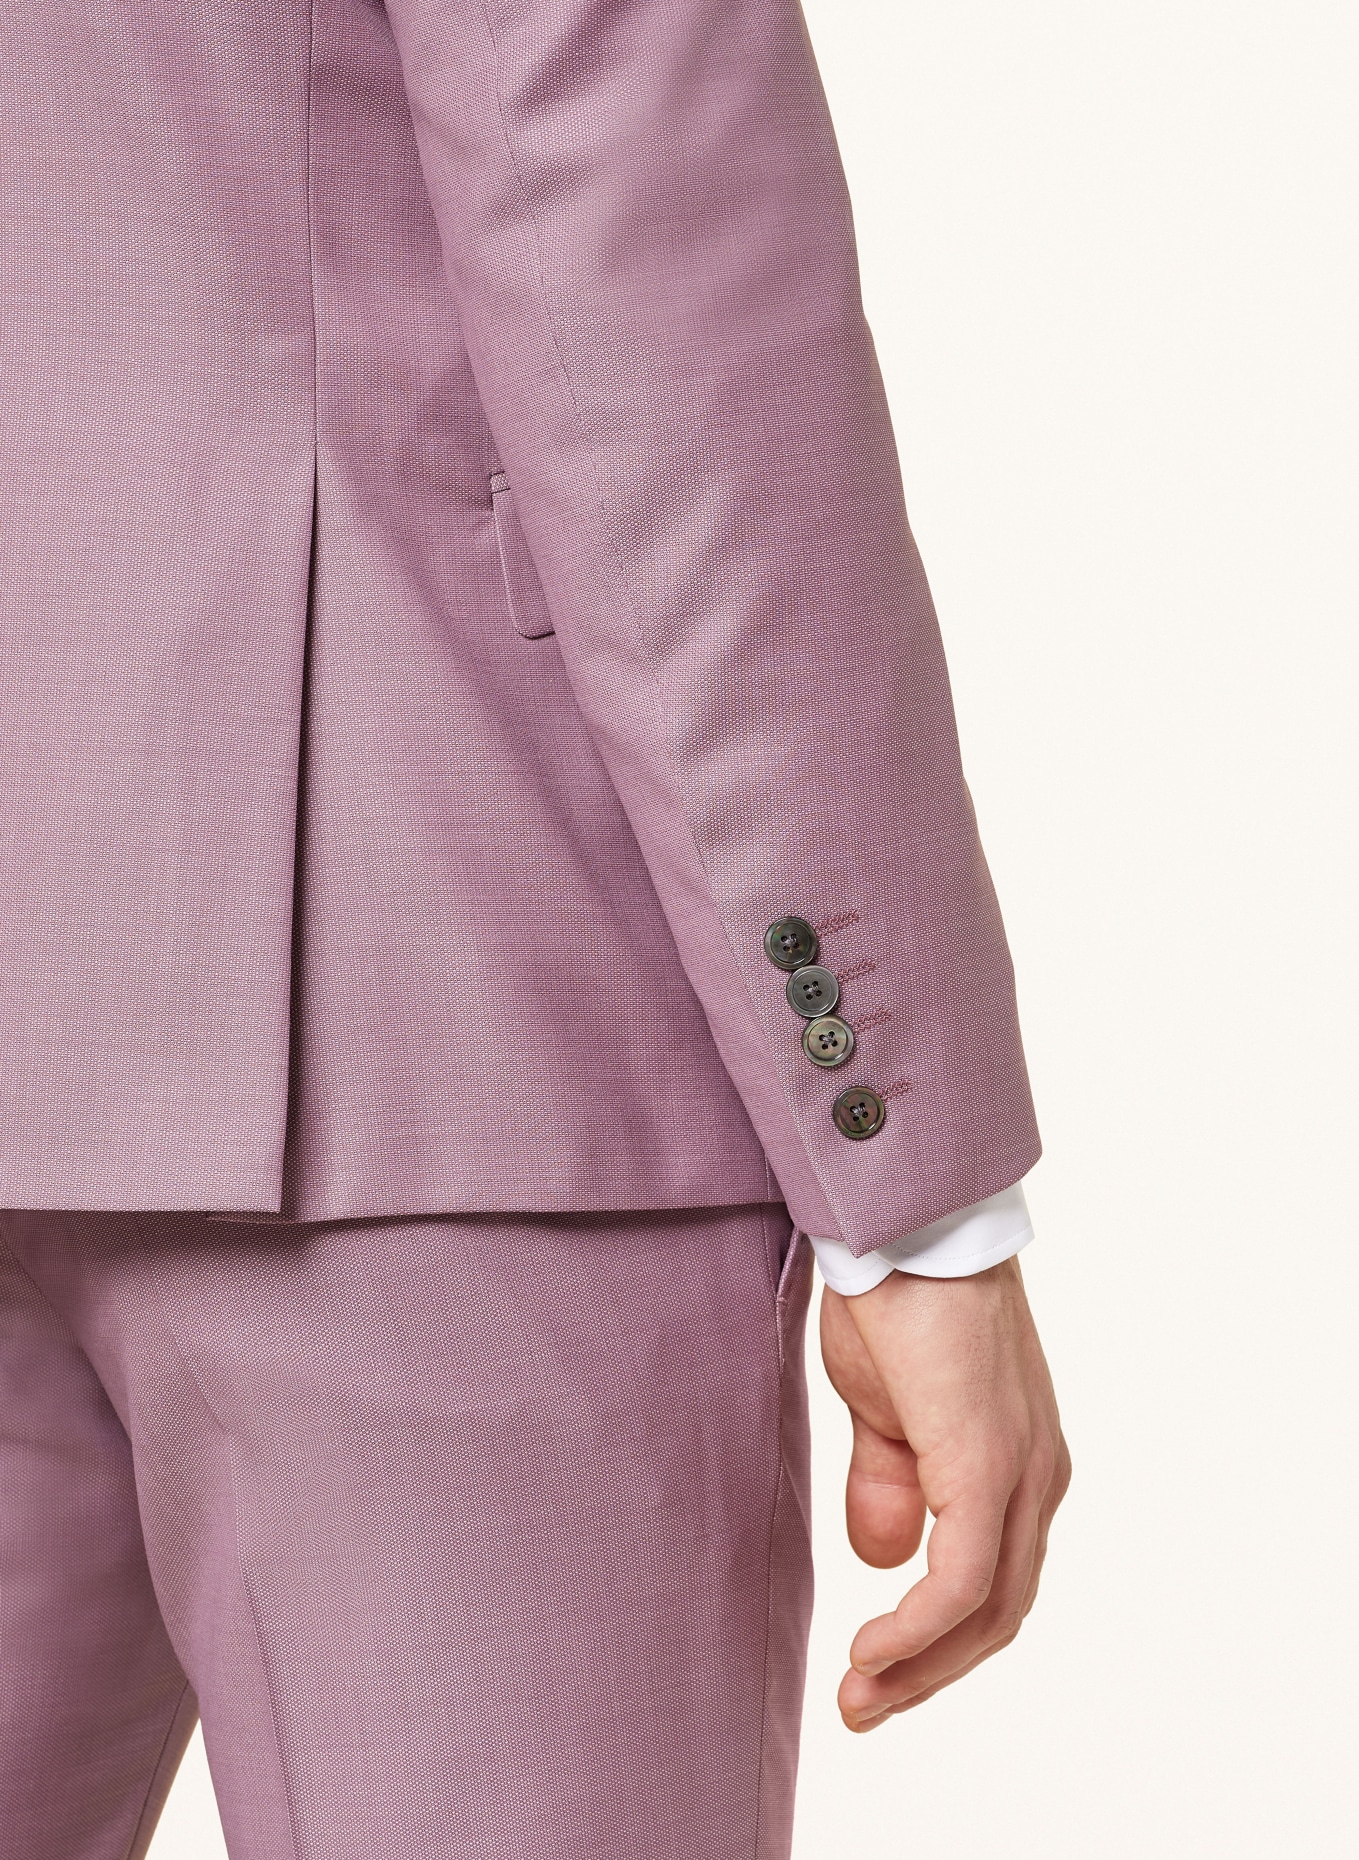 JOOP! Suit jacket HAWKER slim fit, Color: 650 Dark Pink                  650 (Image 6)